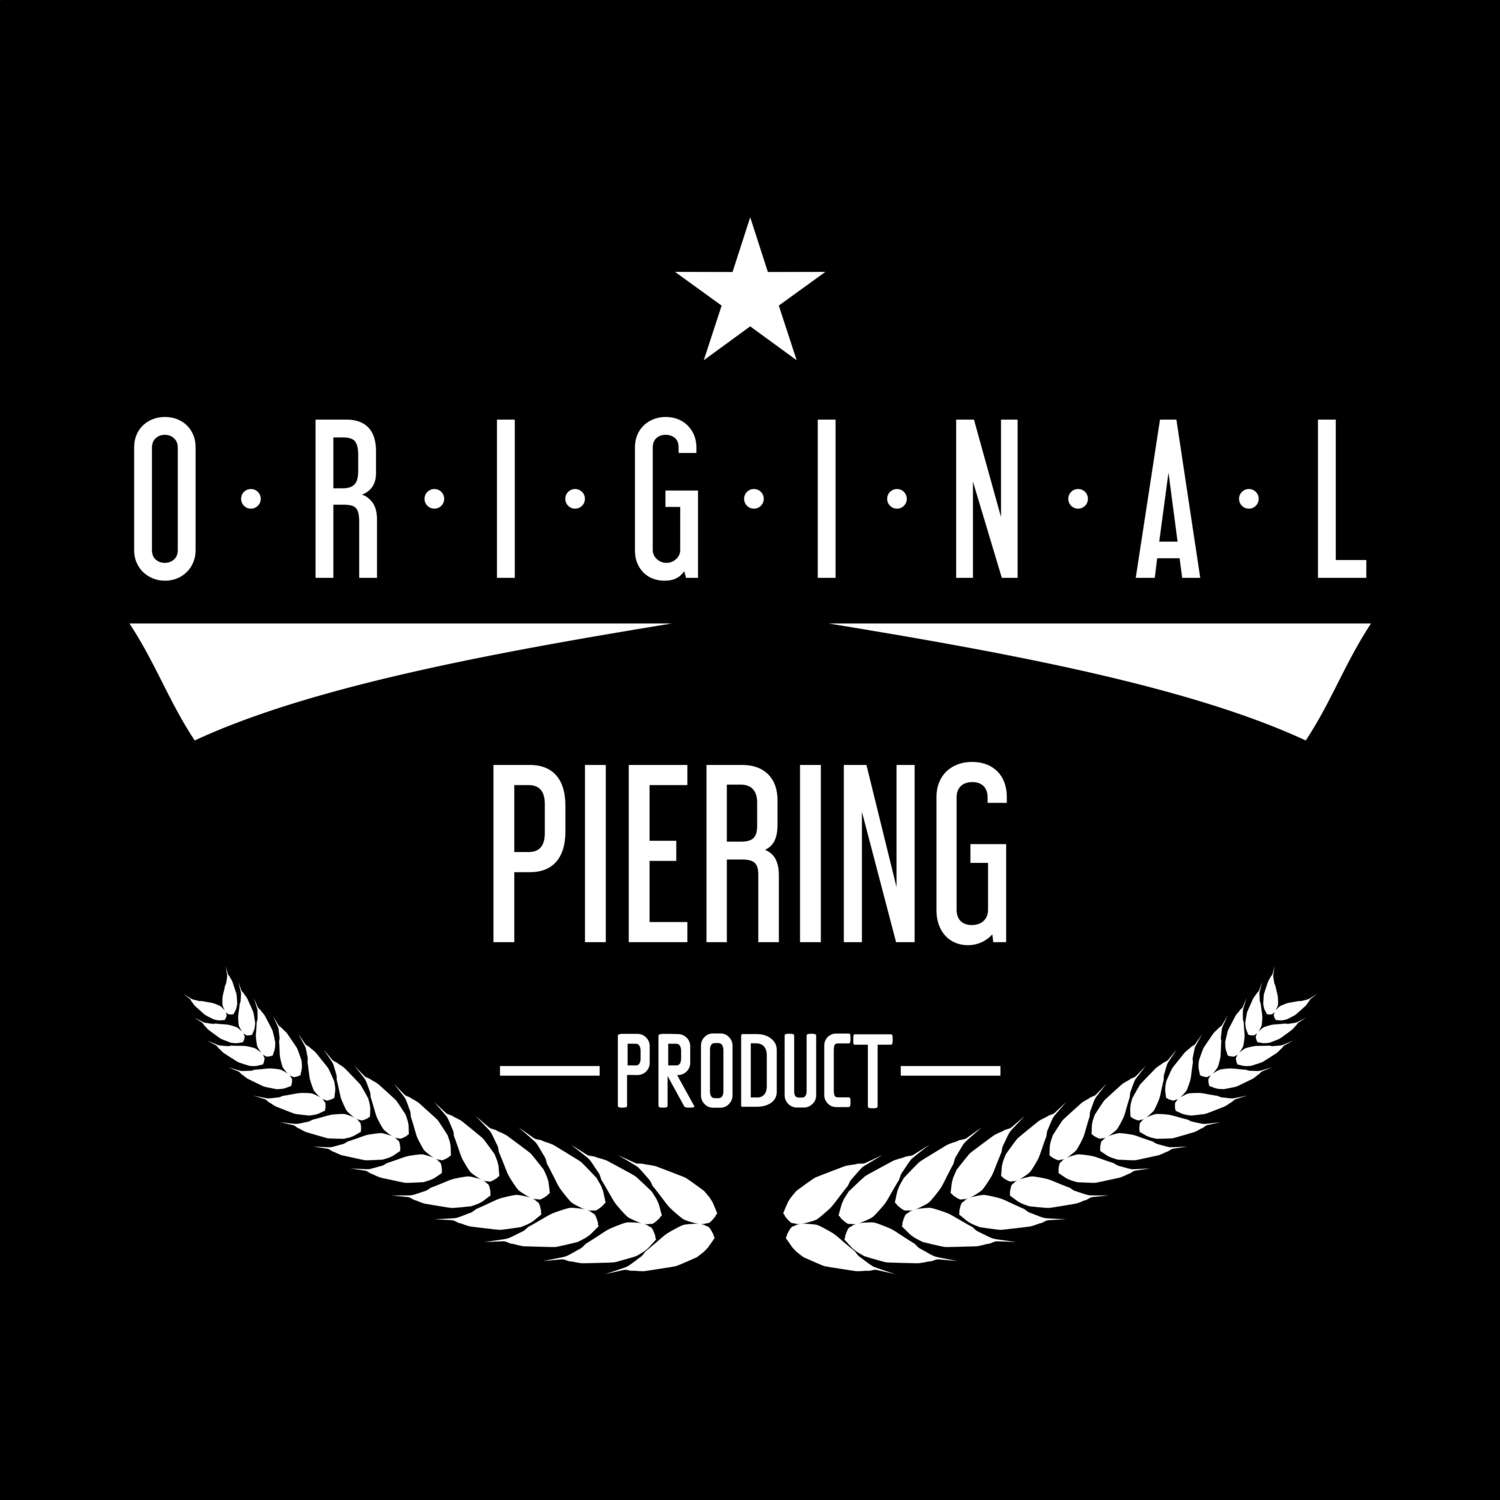 Piering T-Shirt »Original Product«